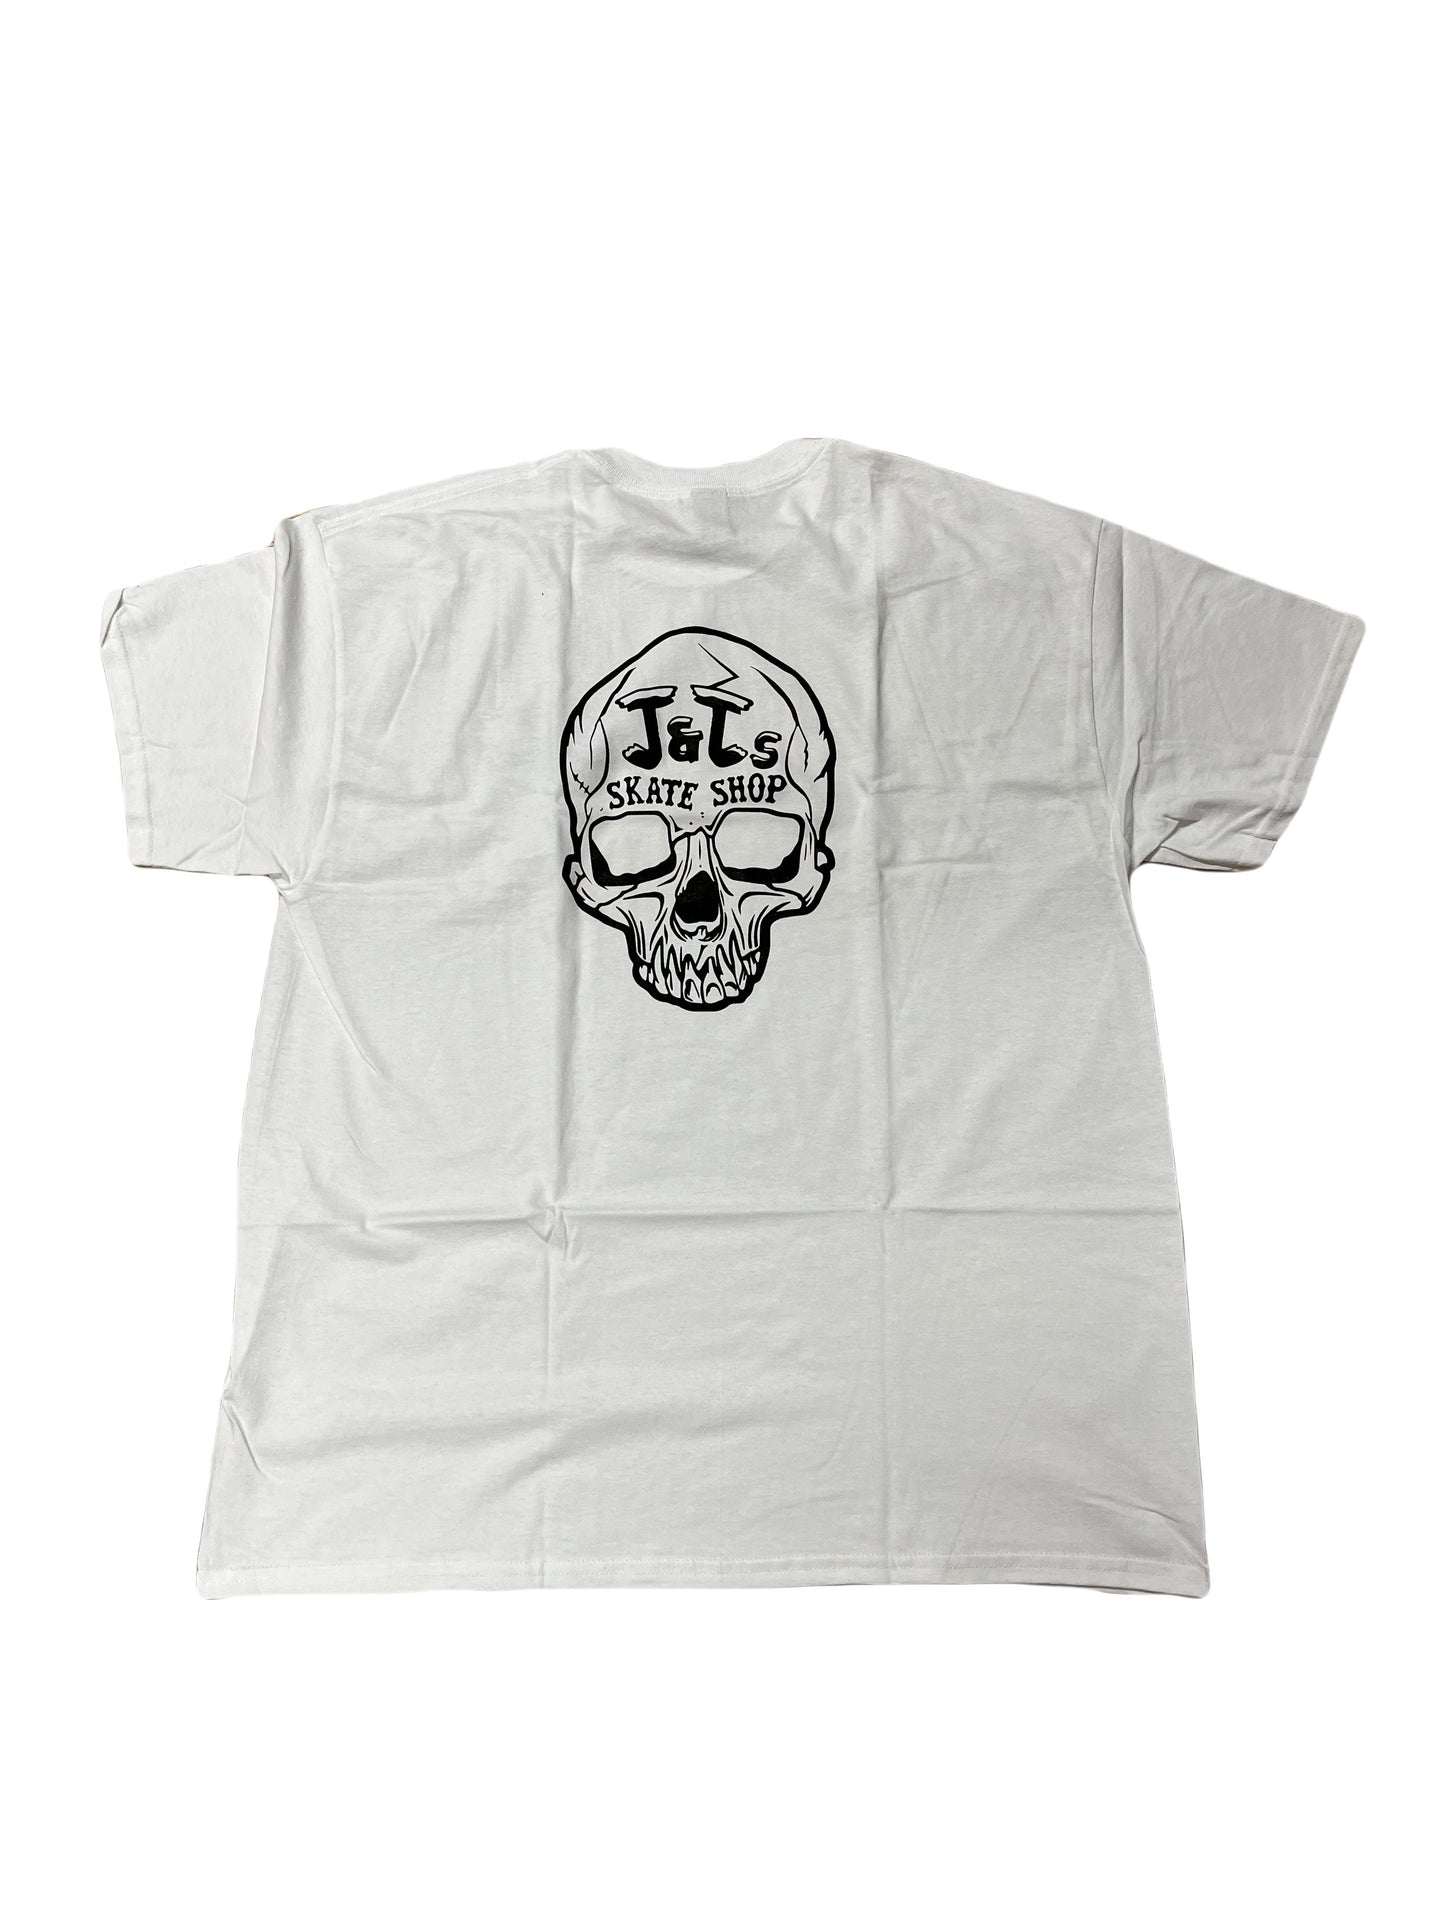 J and J's shop t-shirt skull white